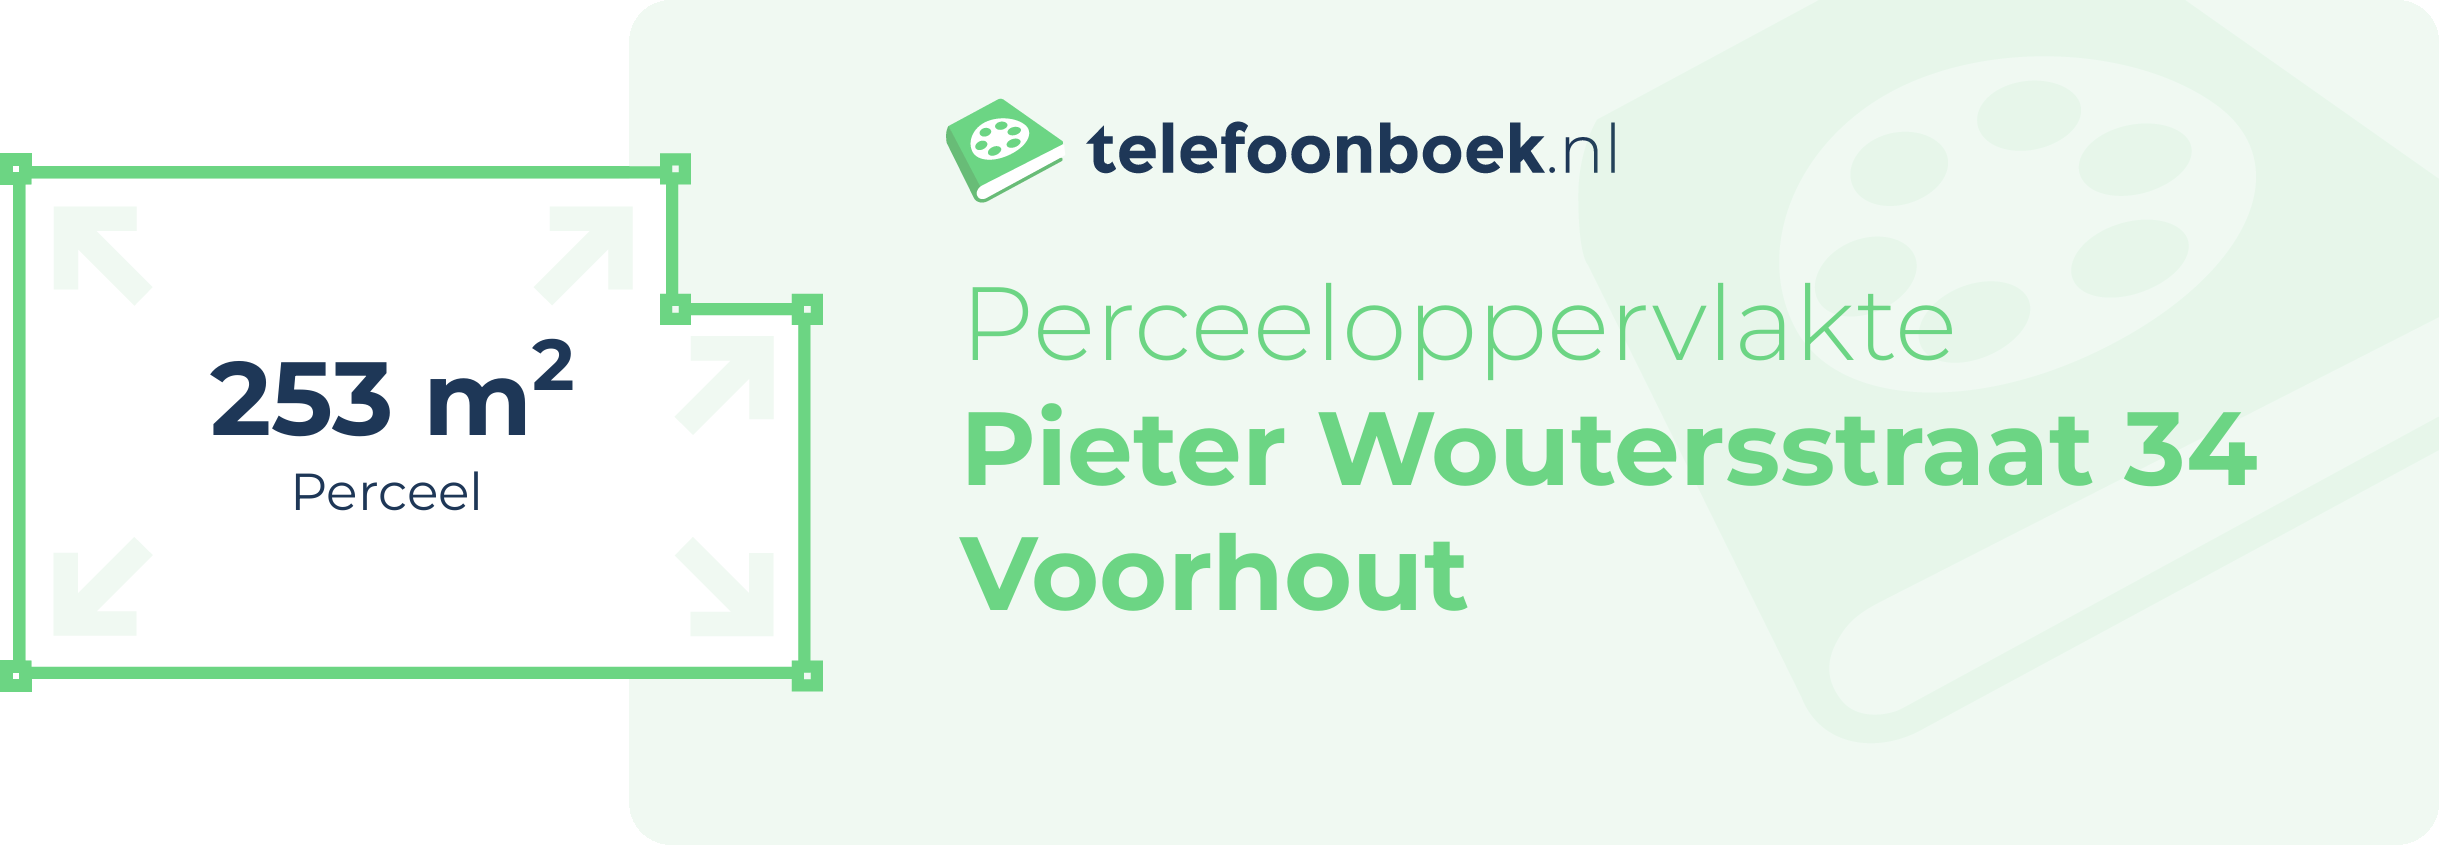 Perceeloppervlakte Pieter Woutersstraat 34 Voorhout